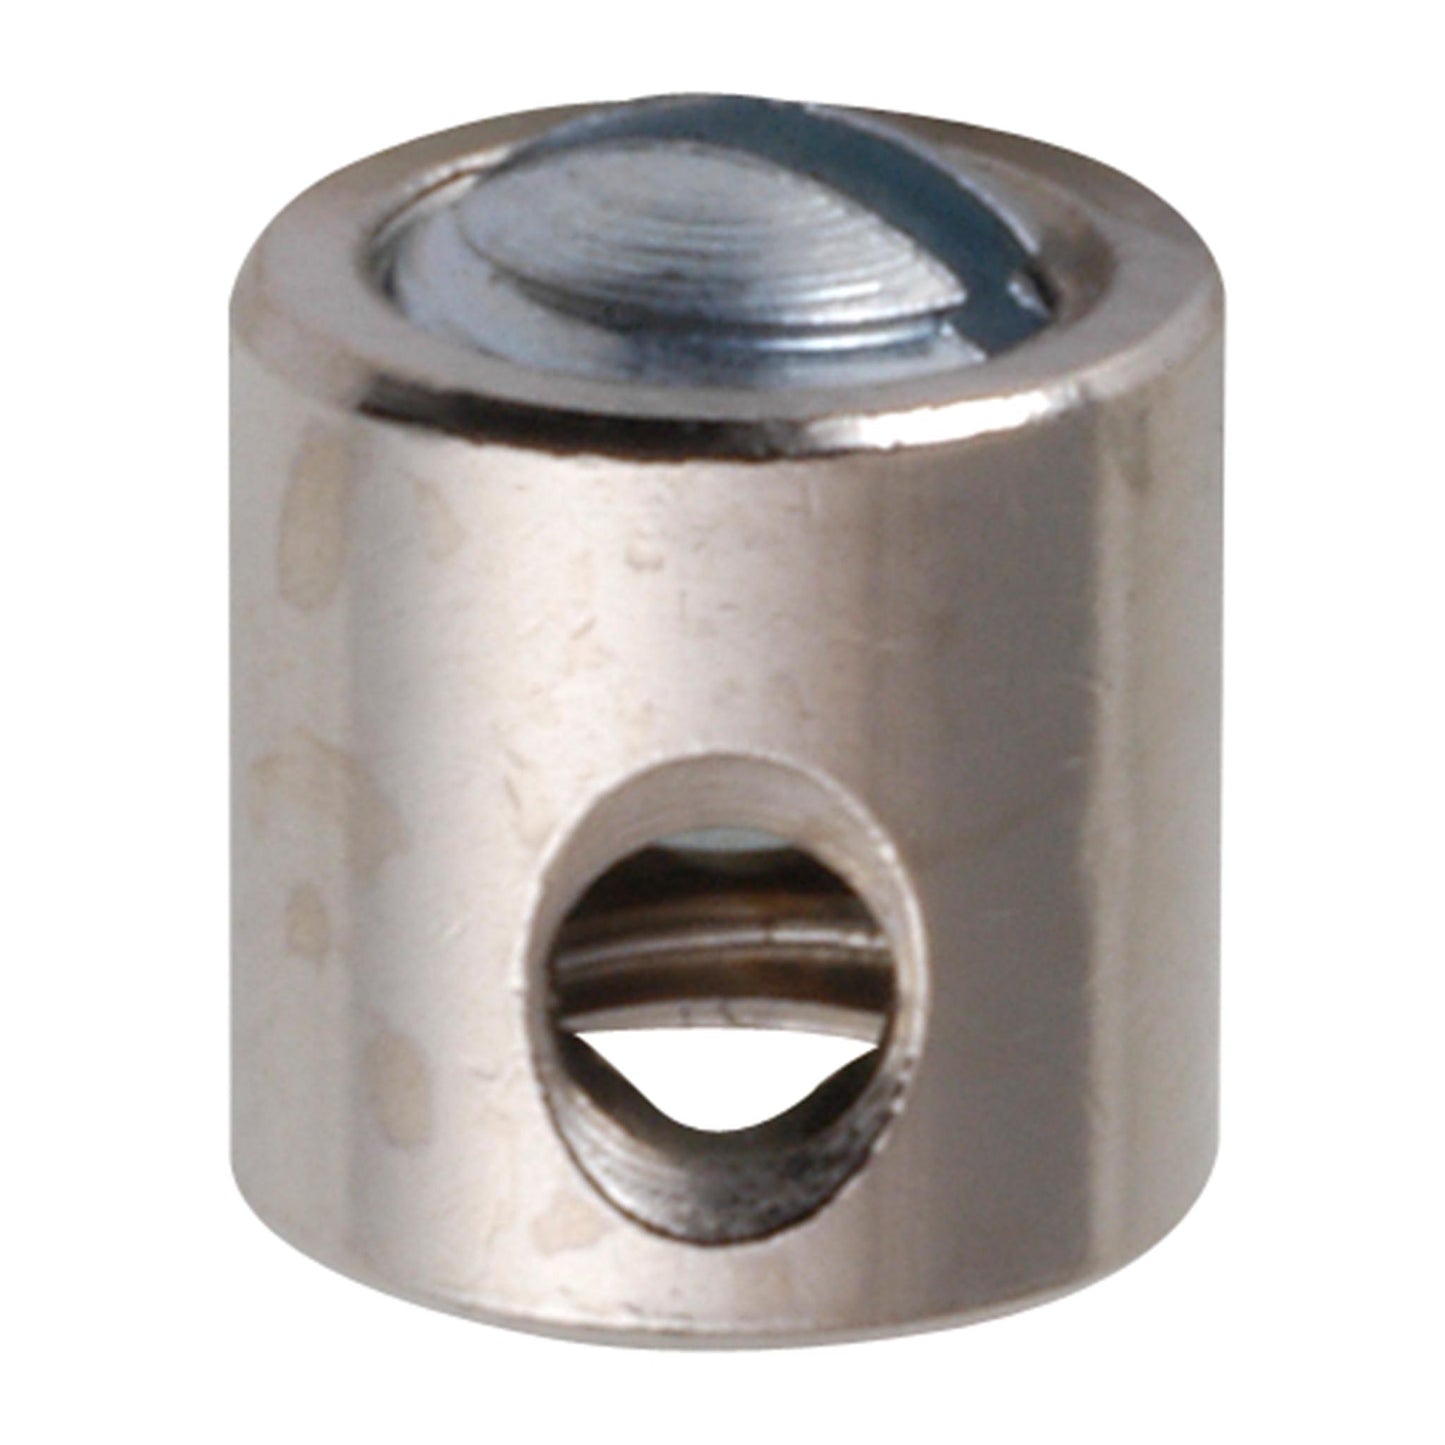 Screw nipple bore Ø 1.8 mm, shaft Ø 5.5 mm nickel-plated brass